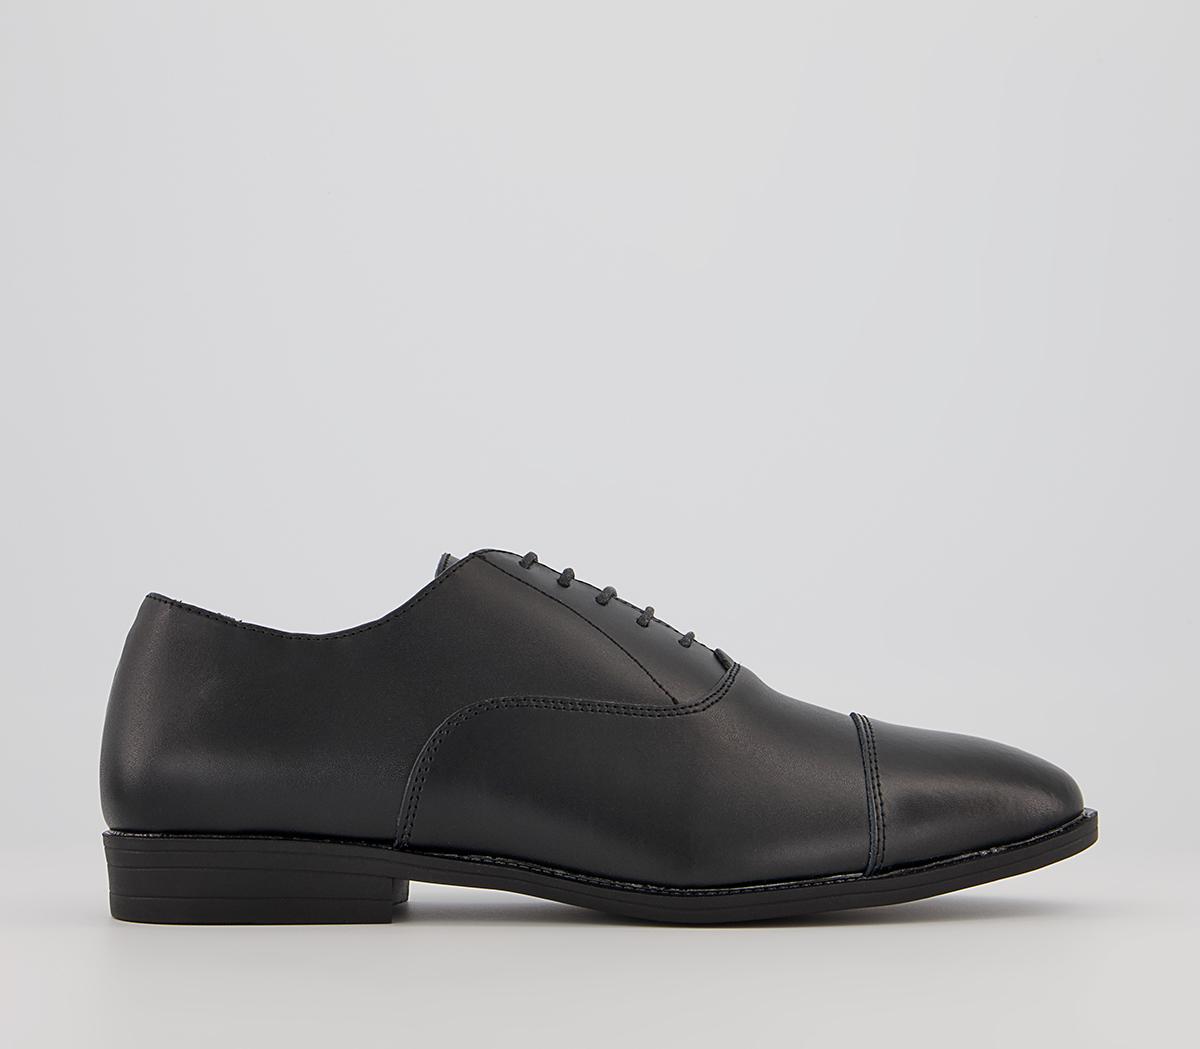 OfficeMemo 2 Plain Oxford ShoesBlack Leather